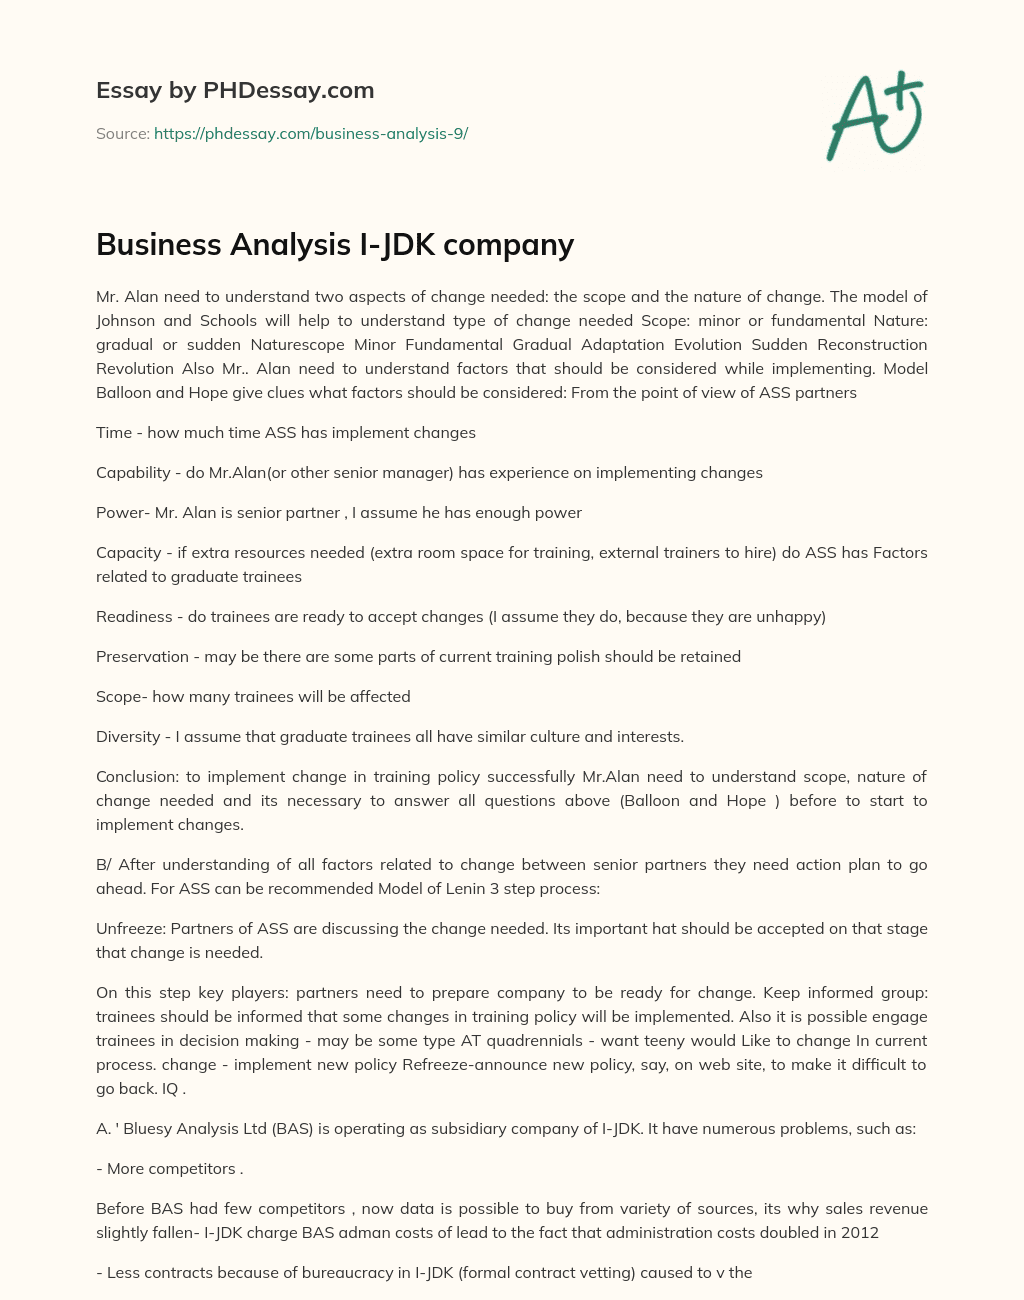 Business Analysis I-JDK company essay